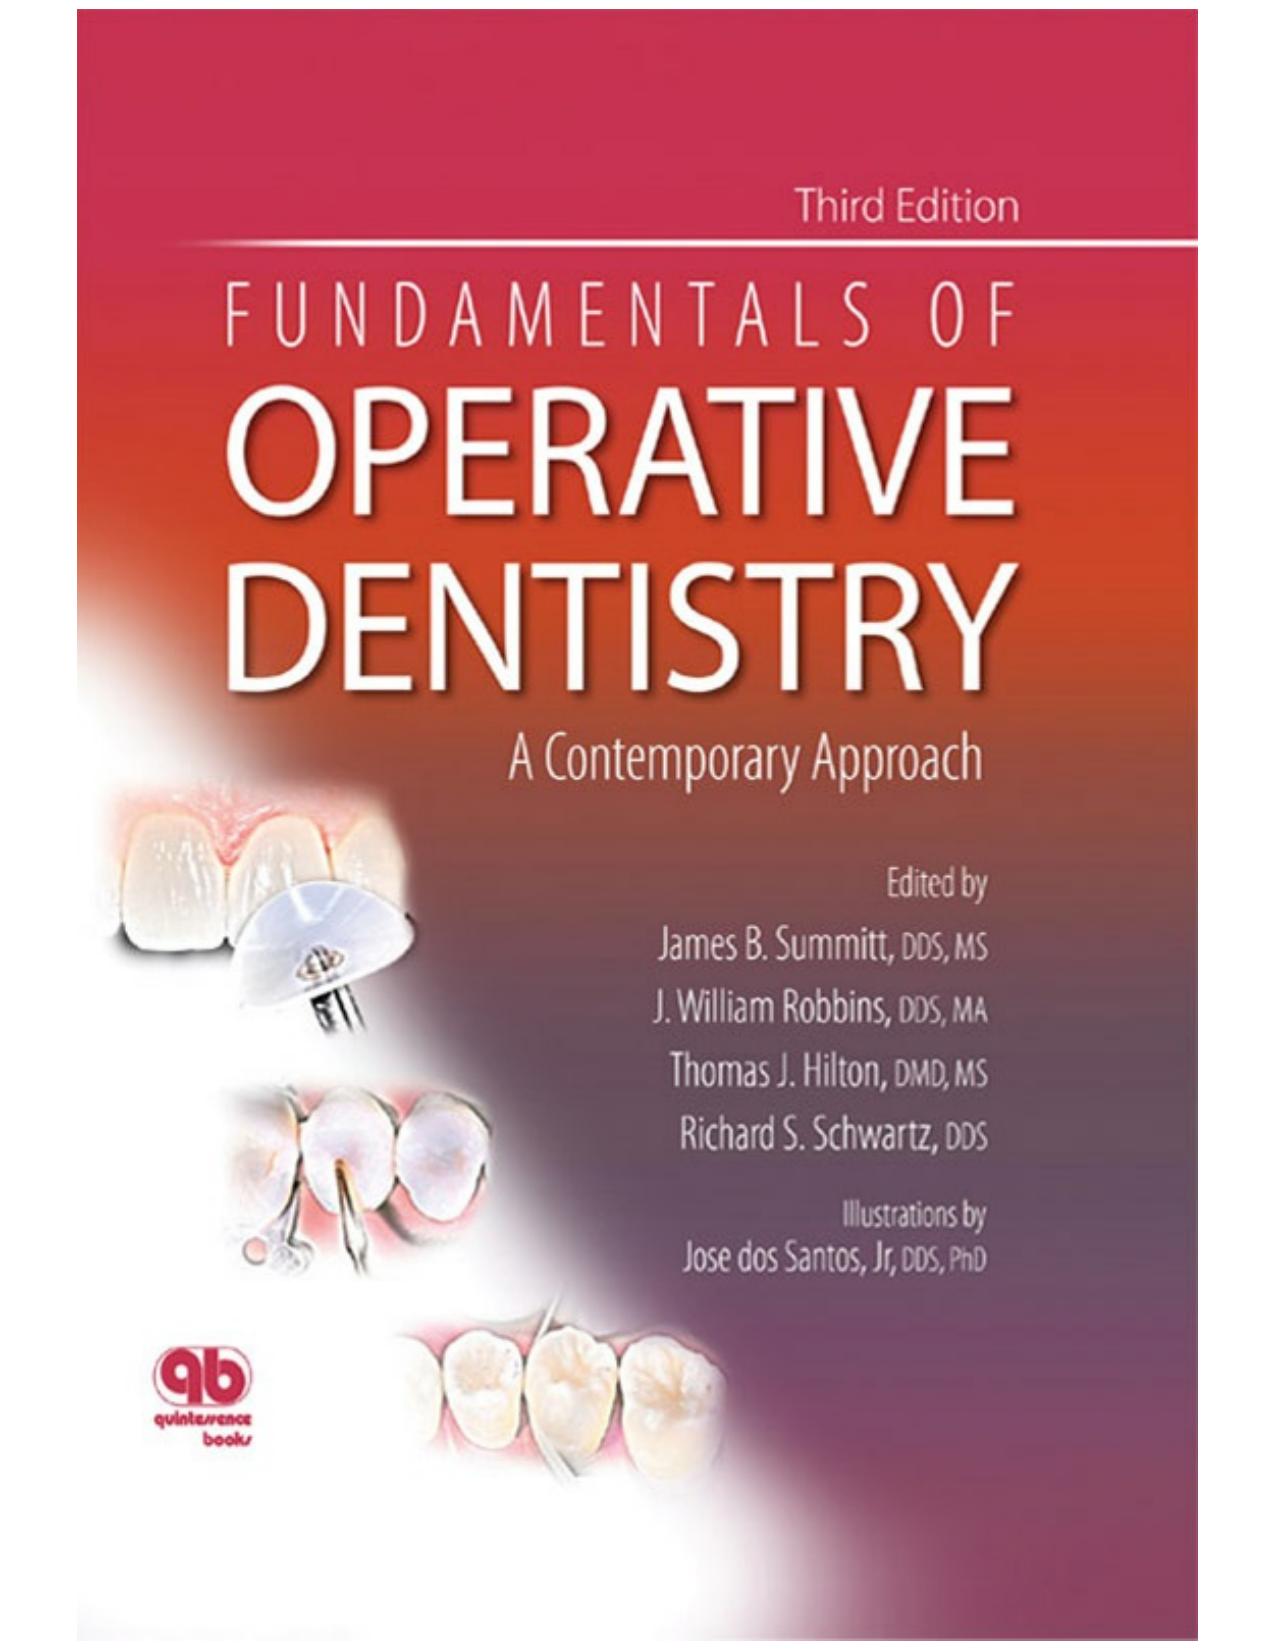 Fundamentals of Operative Dentistry by James B. Summitt